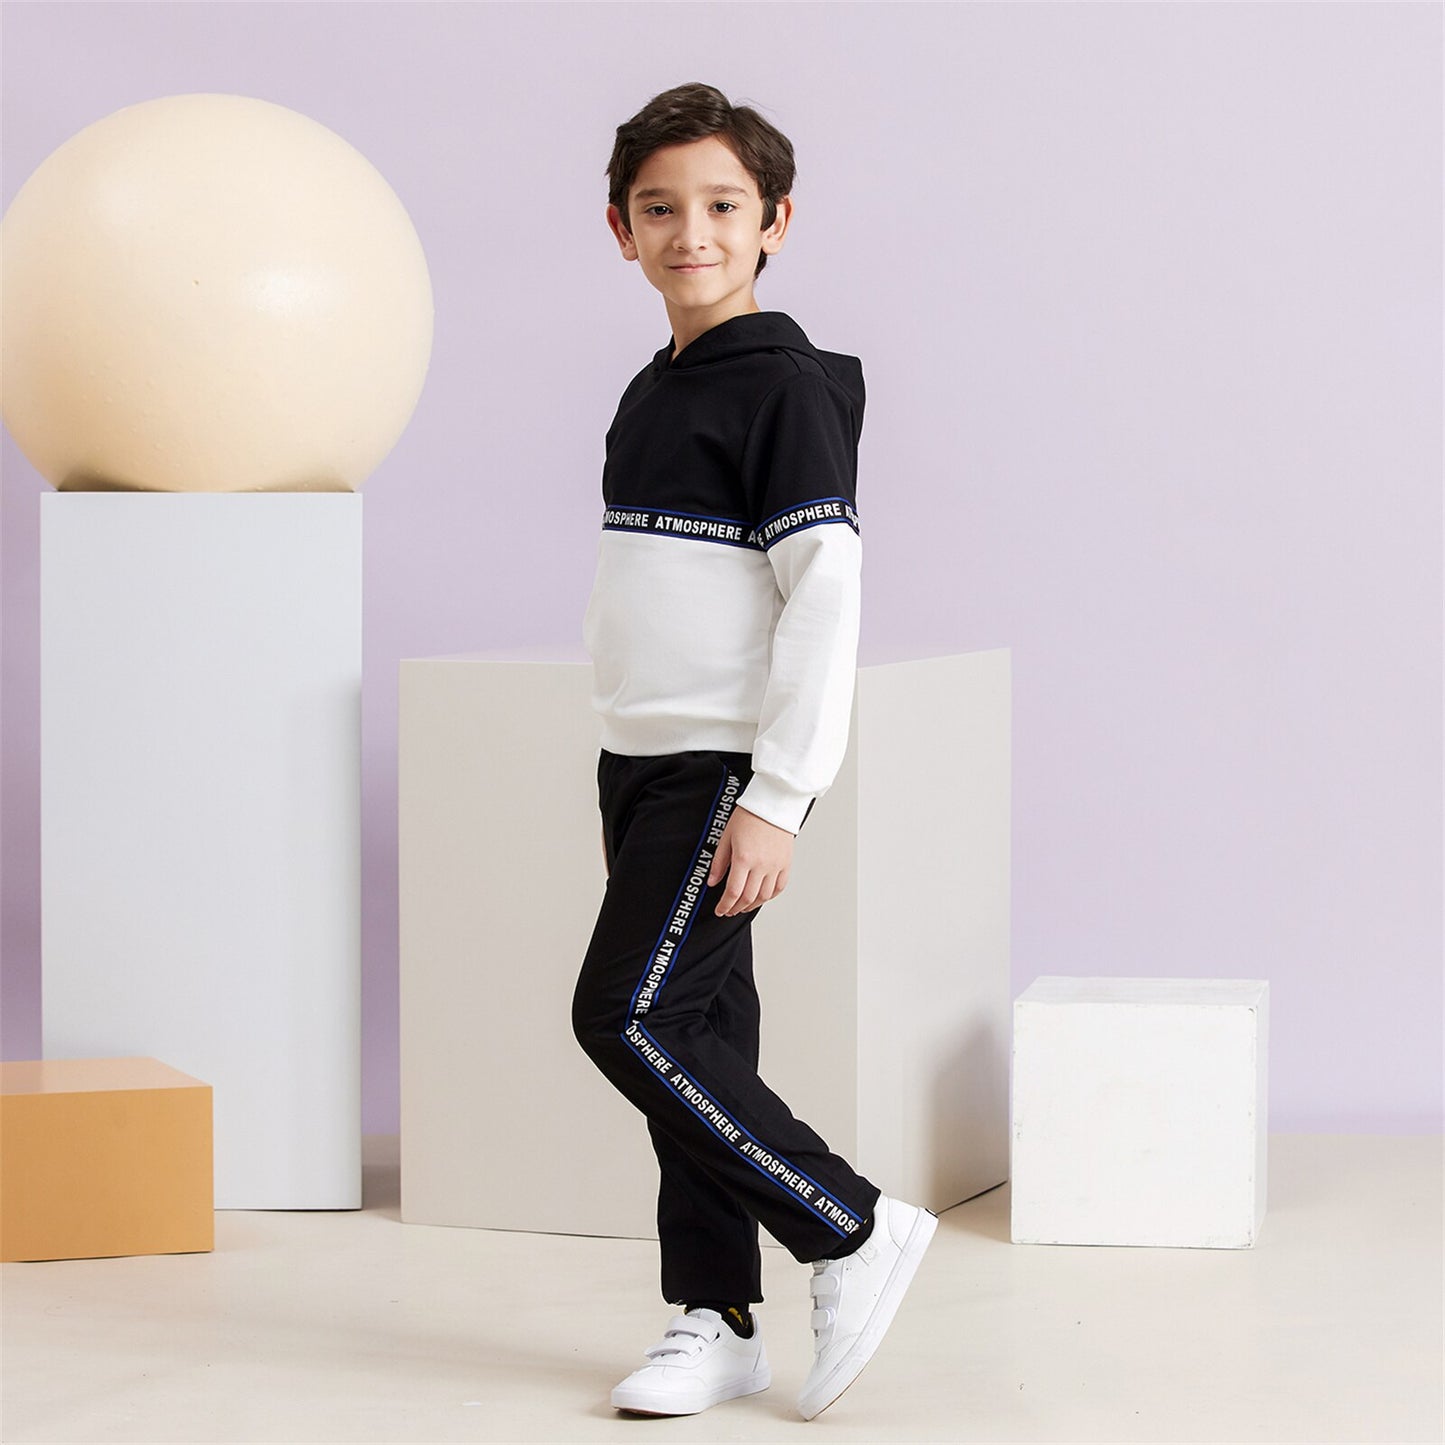 PatPat 2-piece Kid Boy Letter Print Colorblock Hoodie Sweatshirt and Pants Casual Set